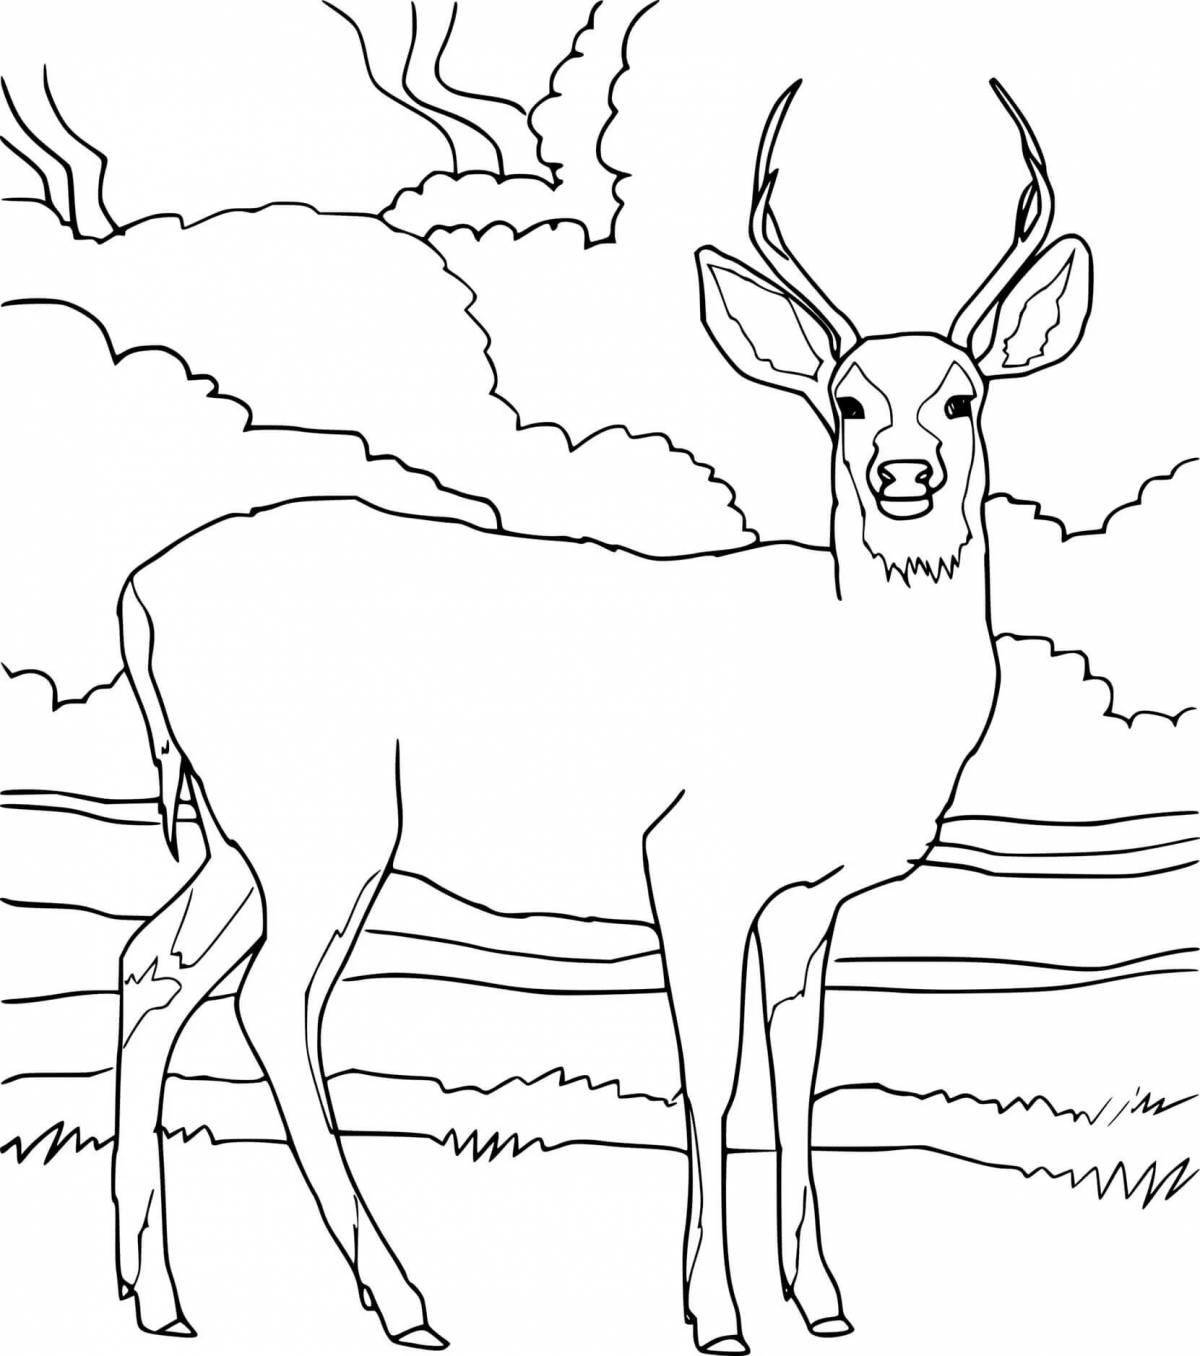 Sparkling deer coloring page